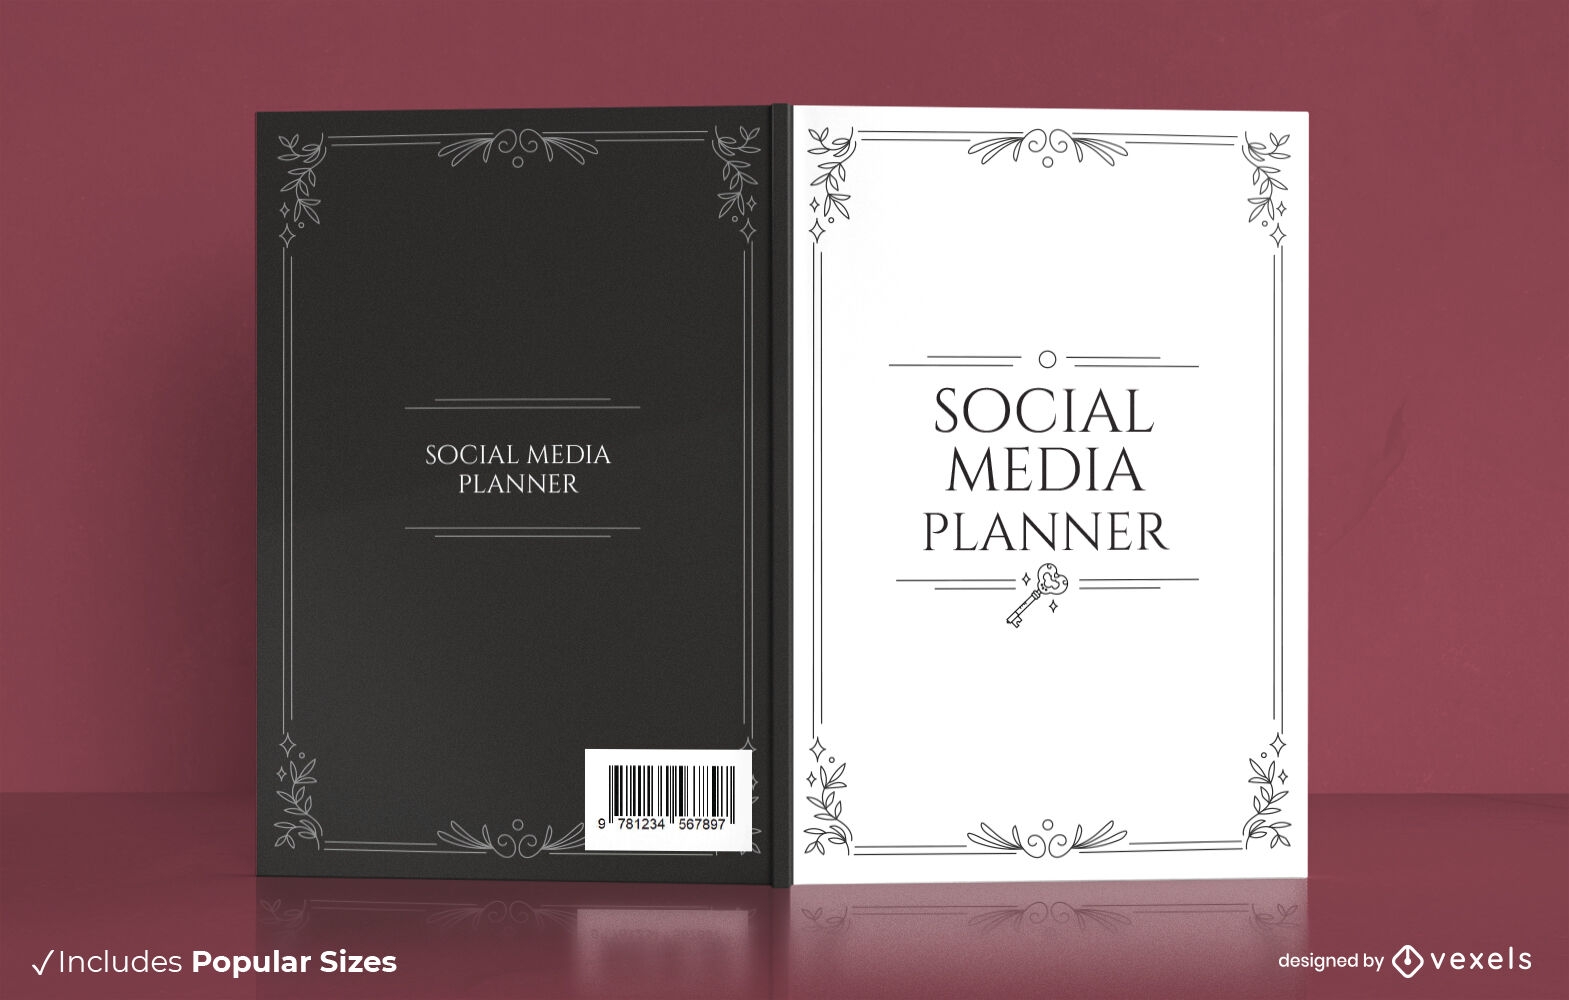 Social media planner book cover design